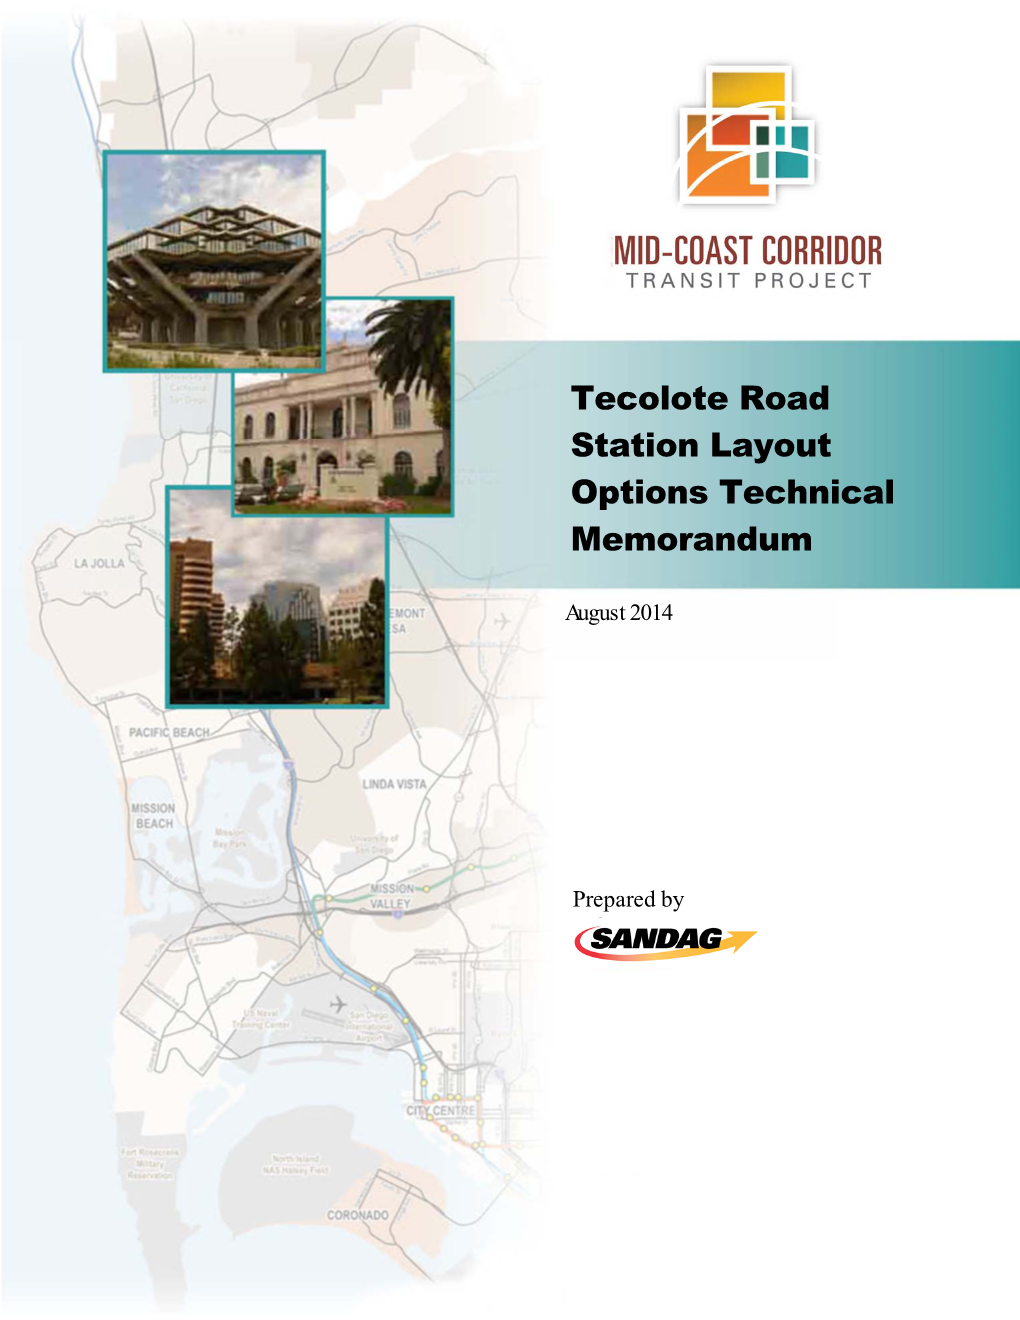 Tecolote Road Station Layout Options Technical Memorandum